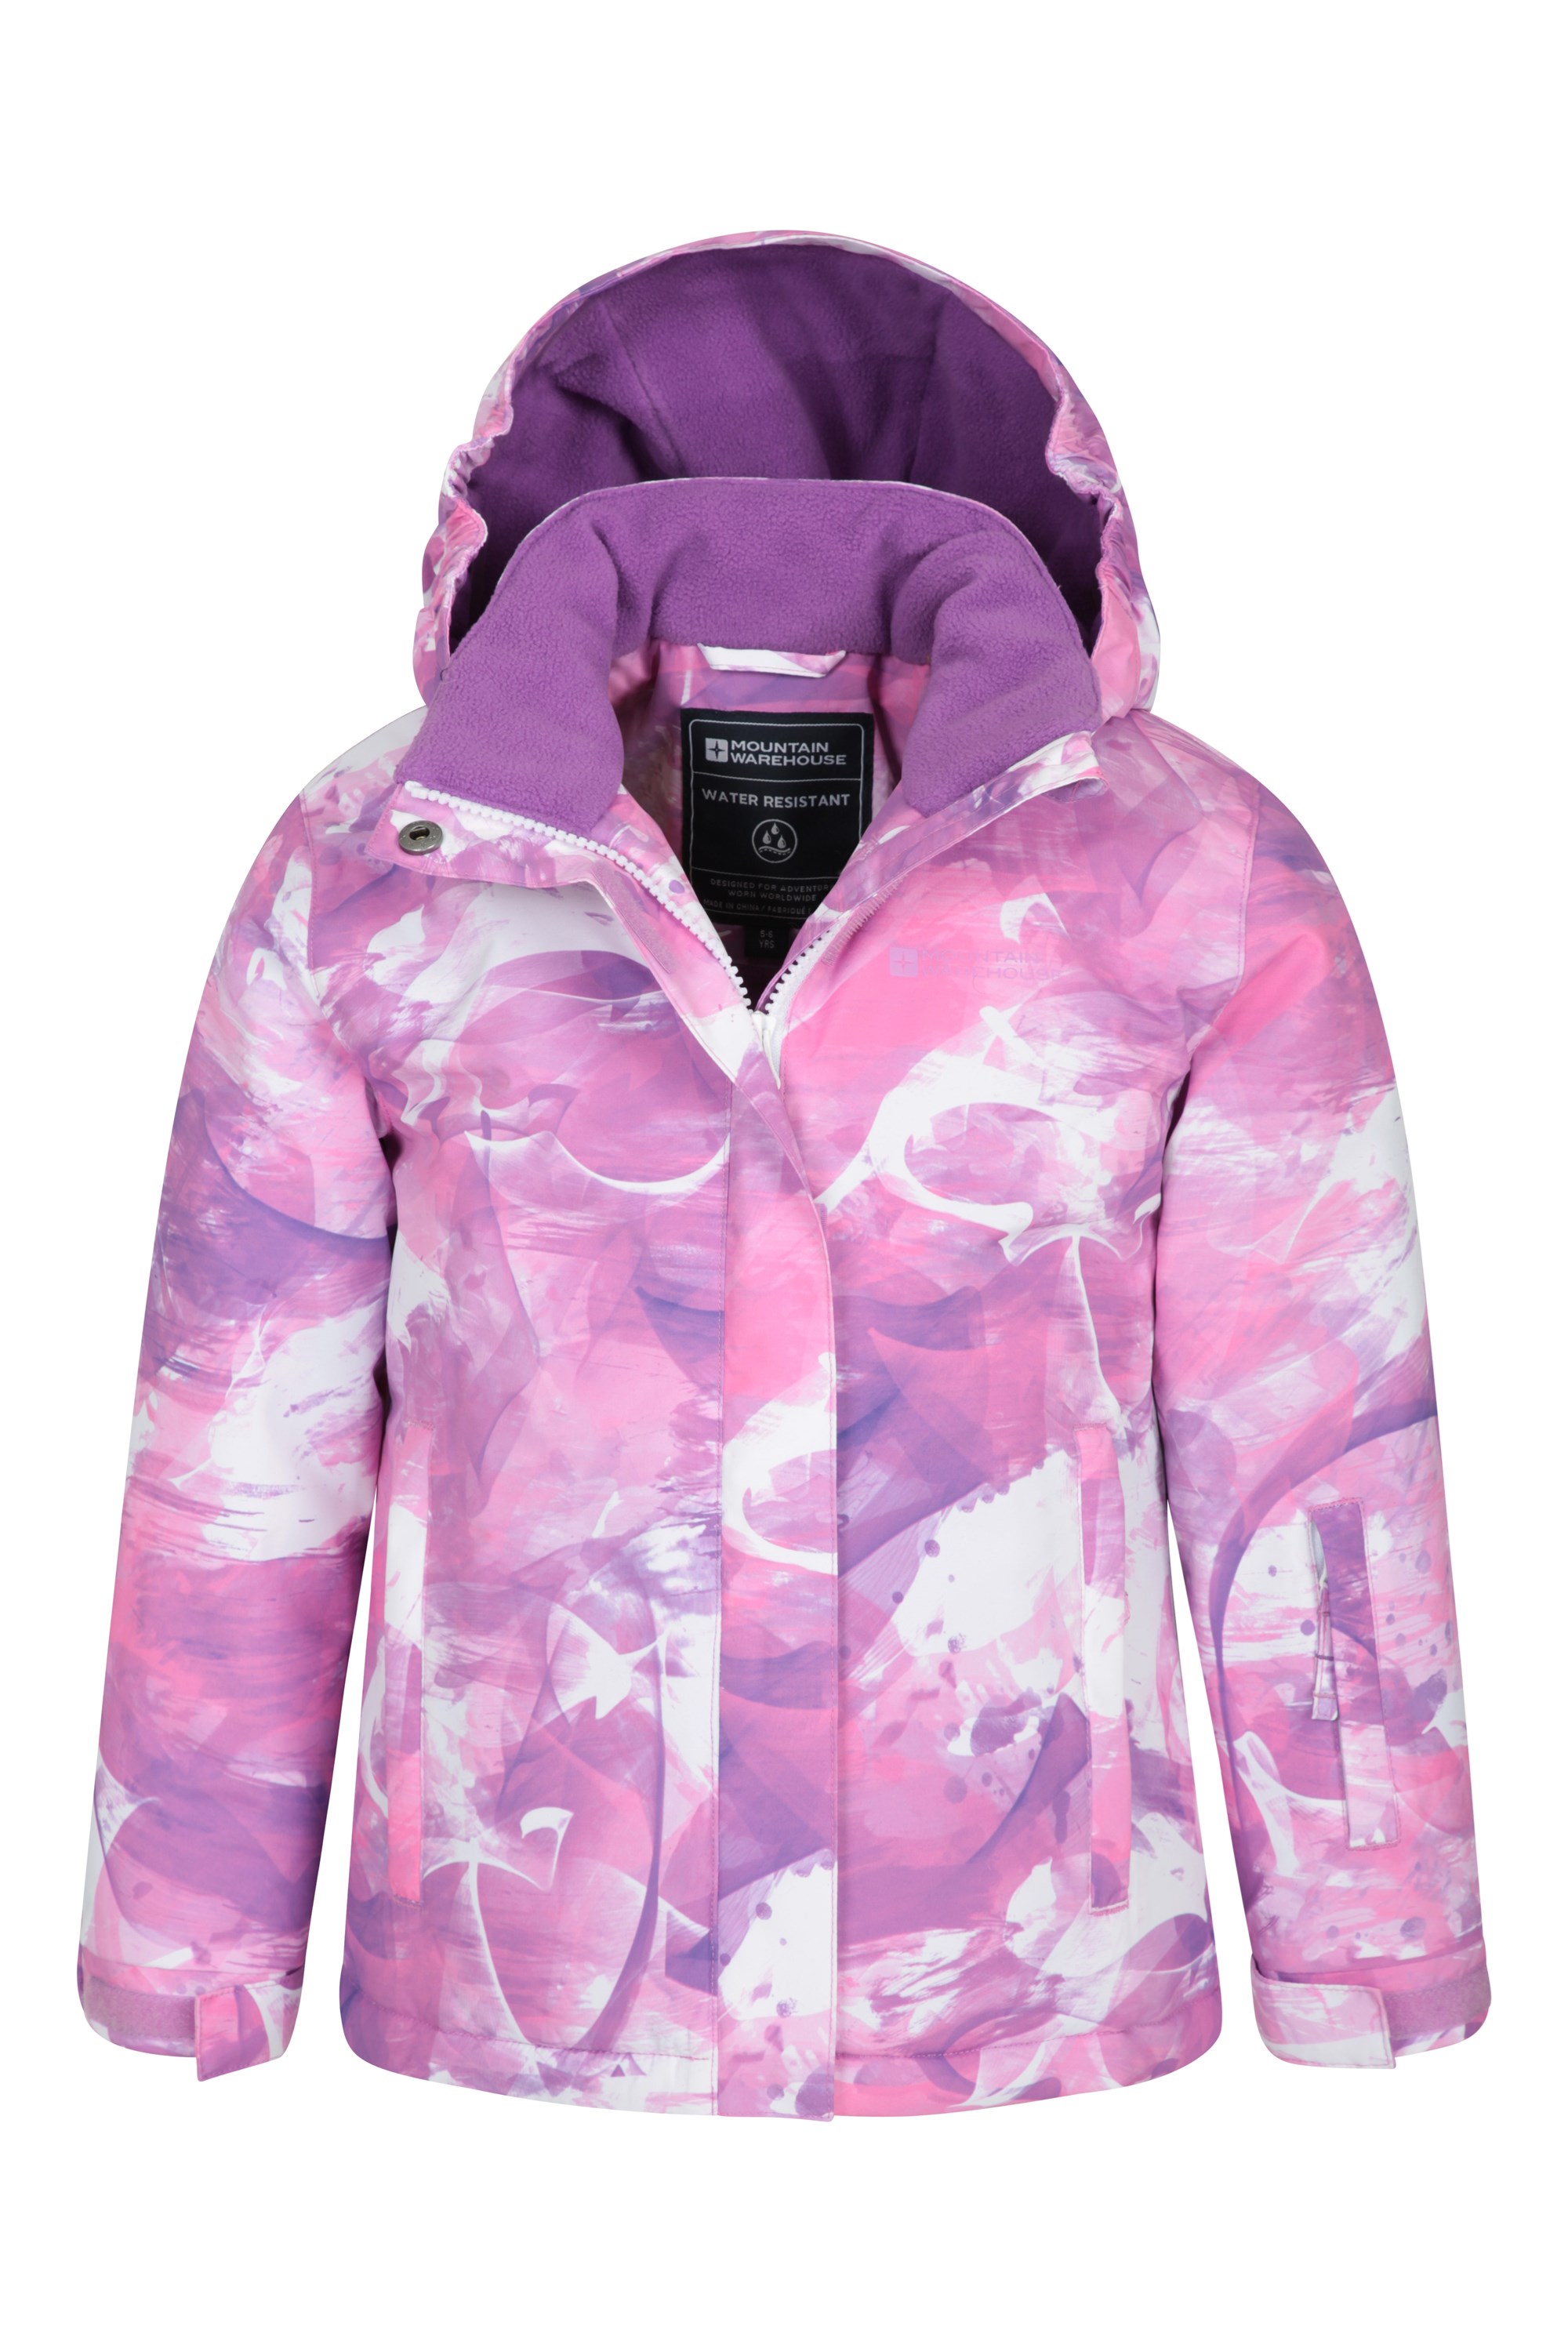 Mountain Warehouse Snowdrop Printed Kids Winter Ski Jacket-Waterproof 